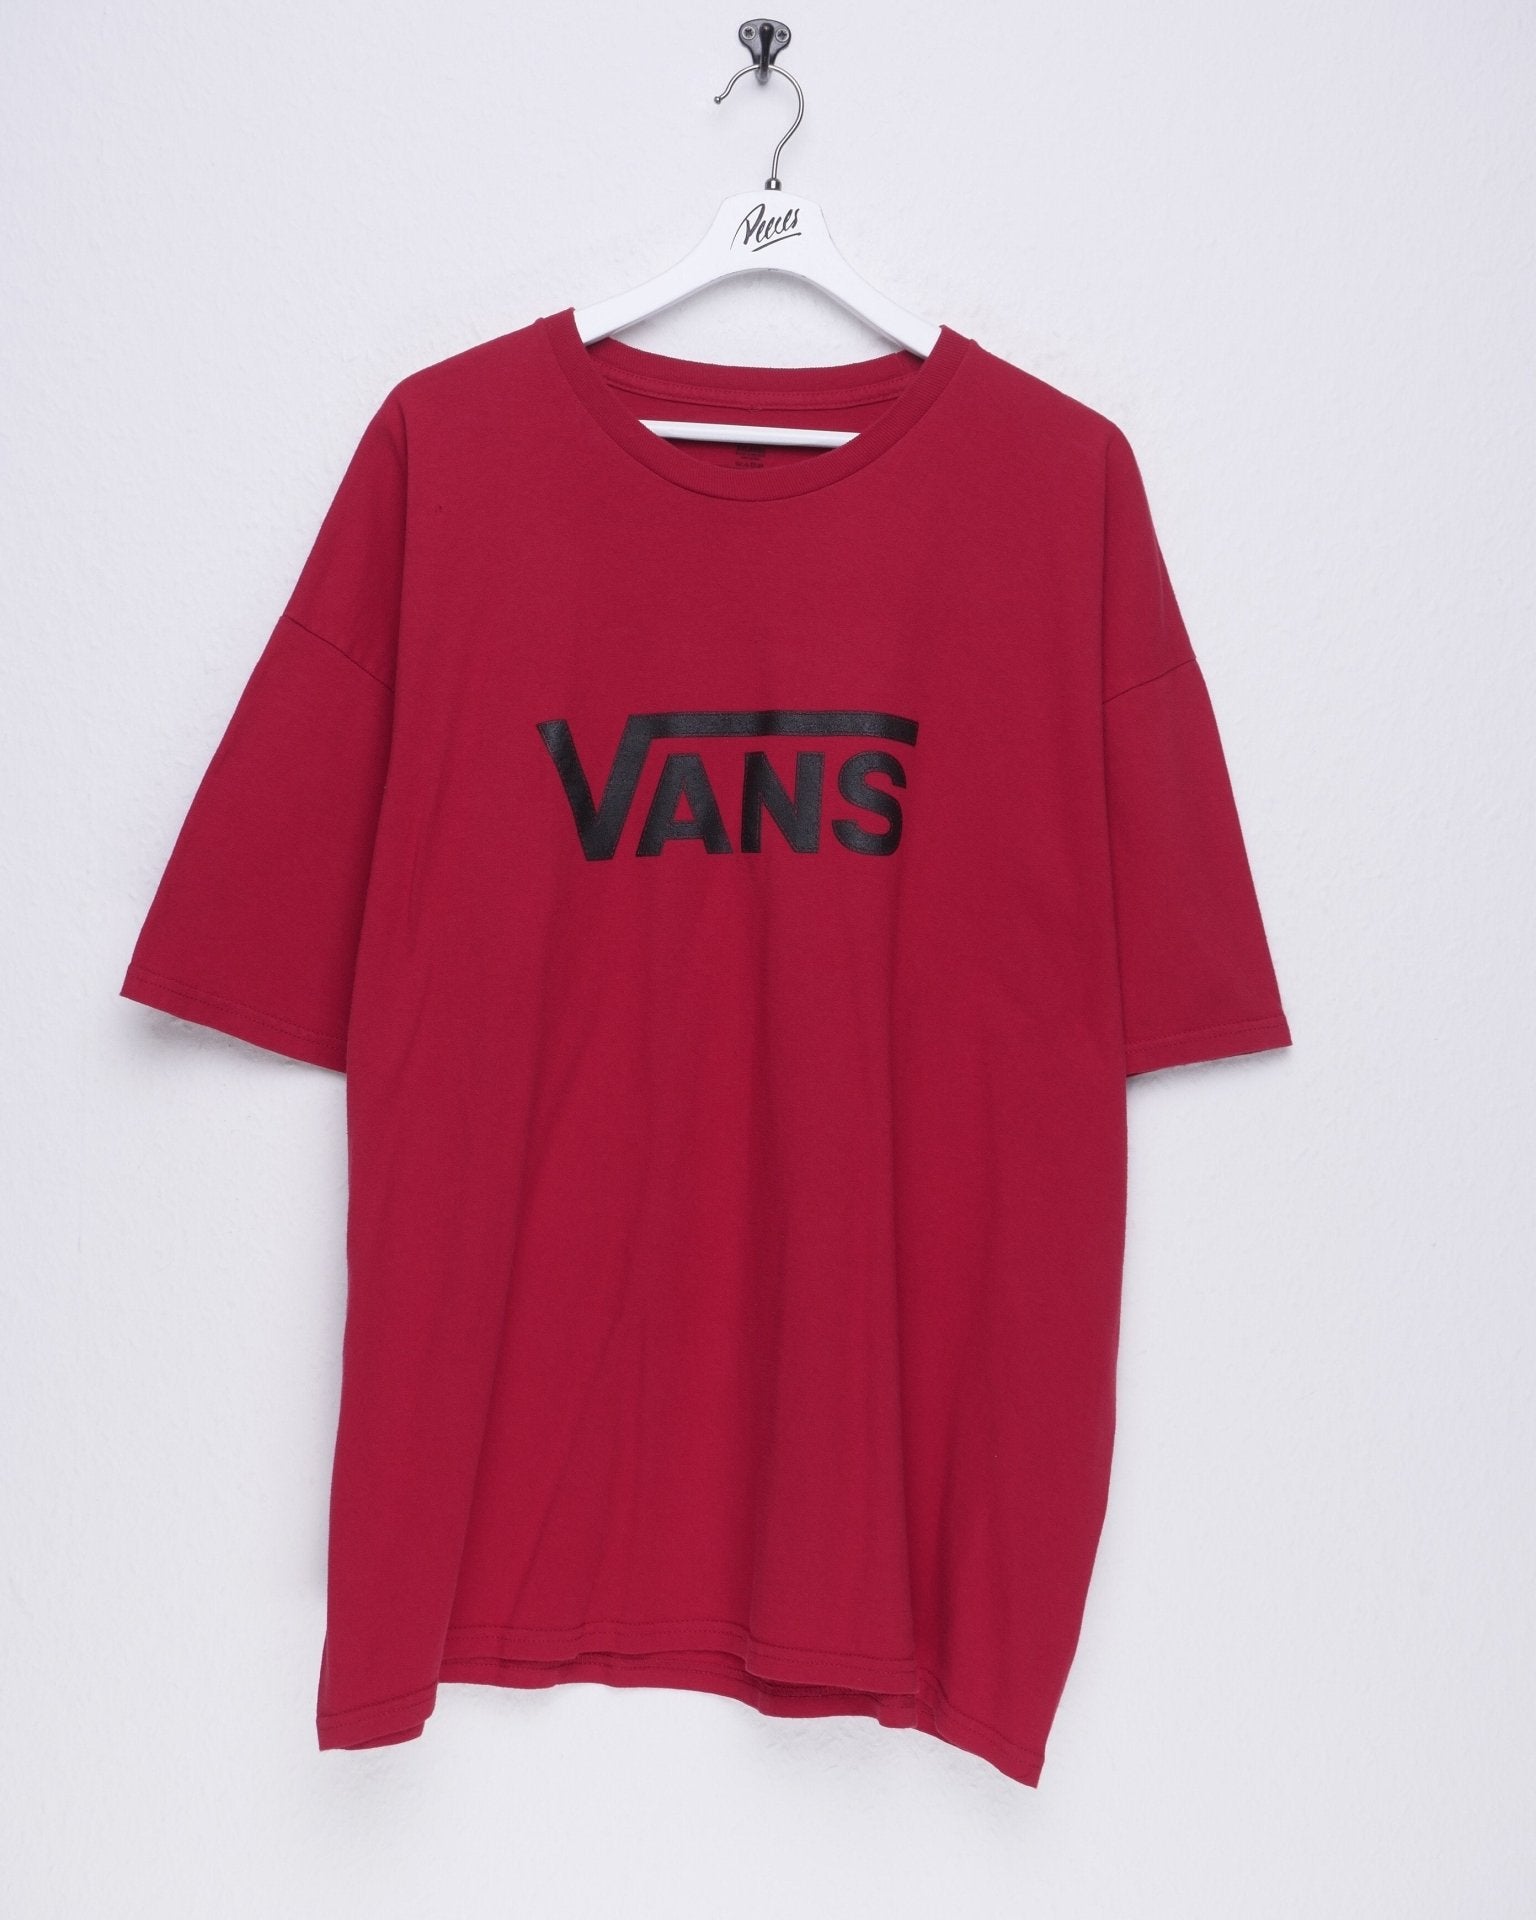 vans printed Big Logo red oversized Shirt - Peeces